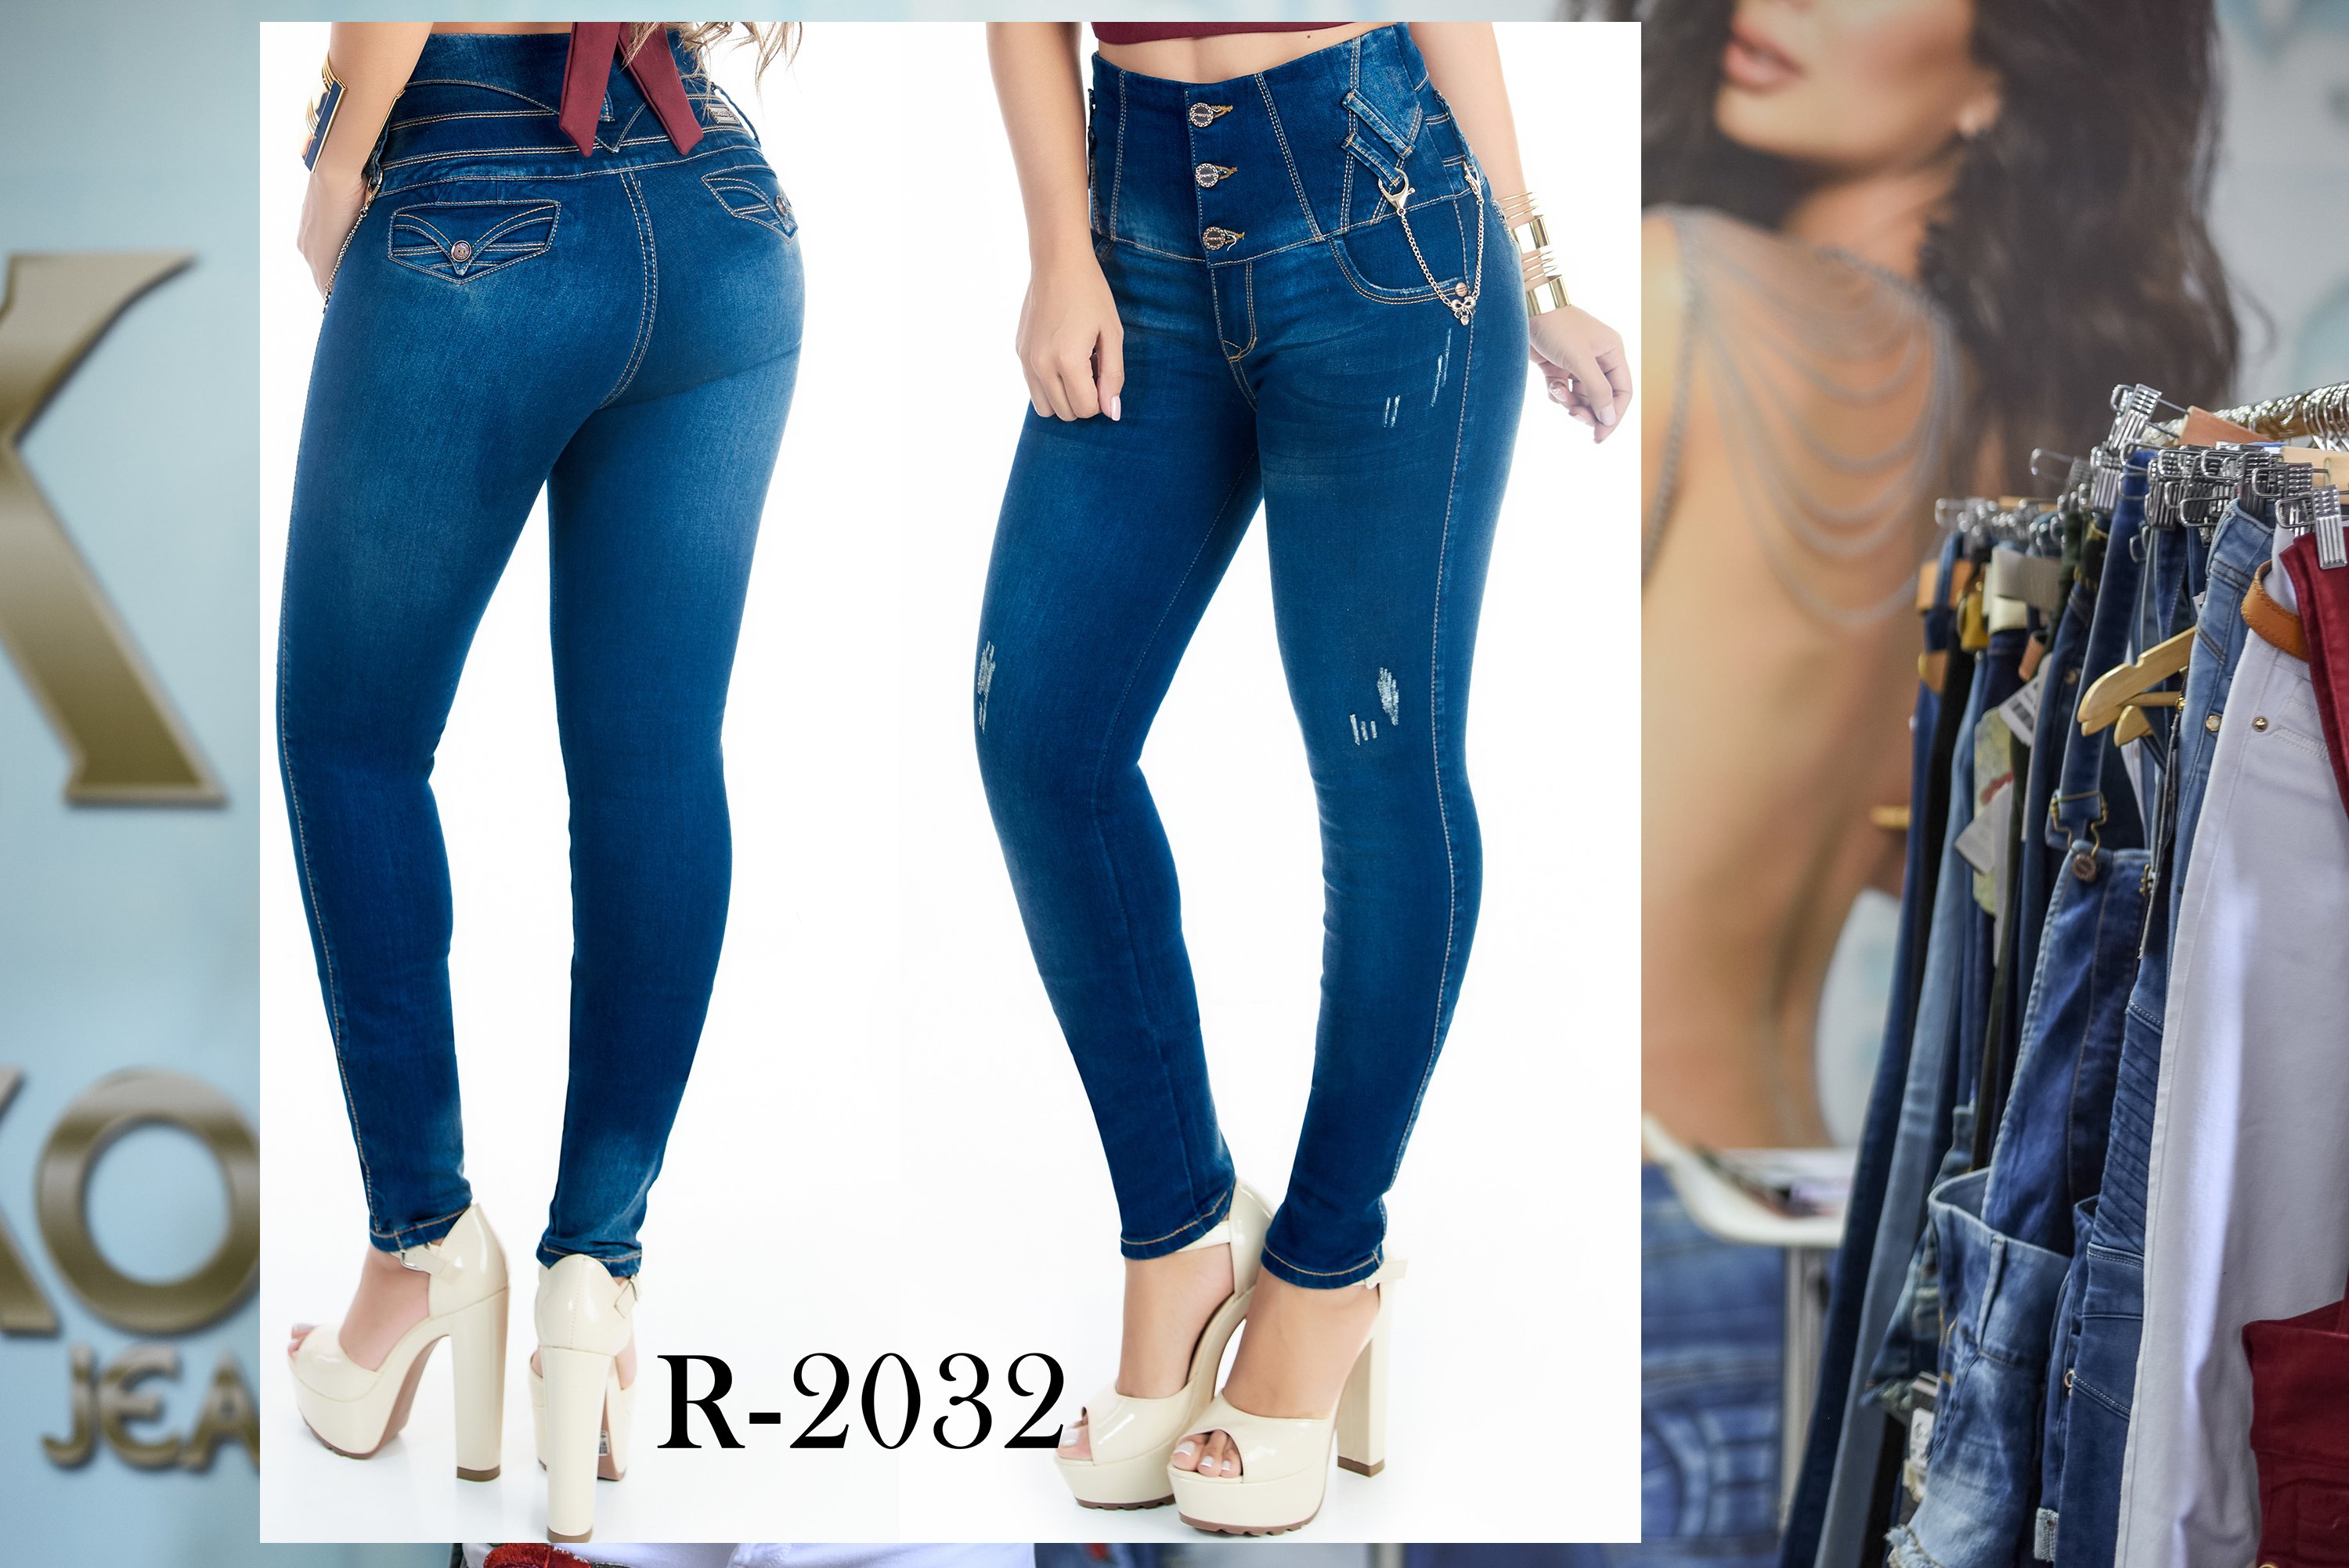 Jeans Twitter: "#chekosjeans #c&amp;h #jeans #moda #estilo #sport #pantalones #rotos #style #diseños #desgastados #procesados #fabrica #confecciones #beauty #outfit #love #cucuta #barranquilla #medellin #bucaramanga ...